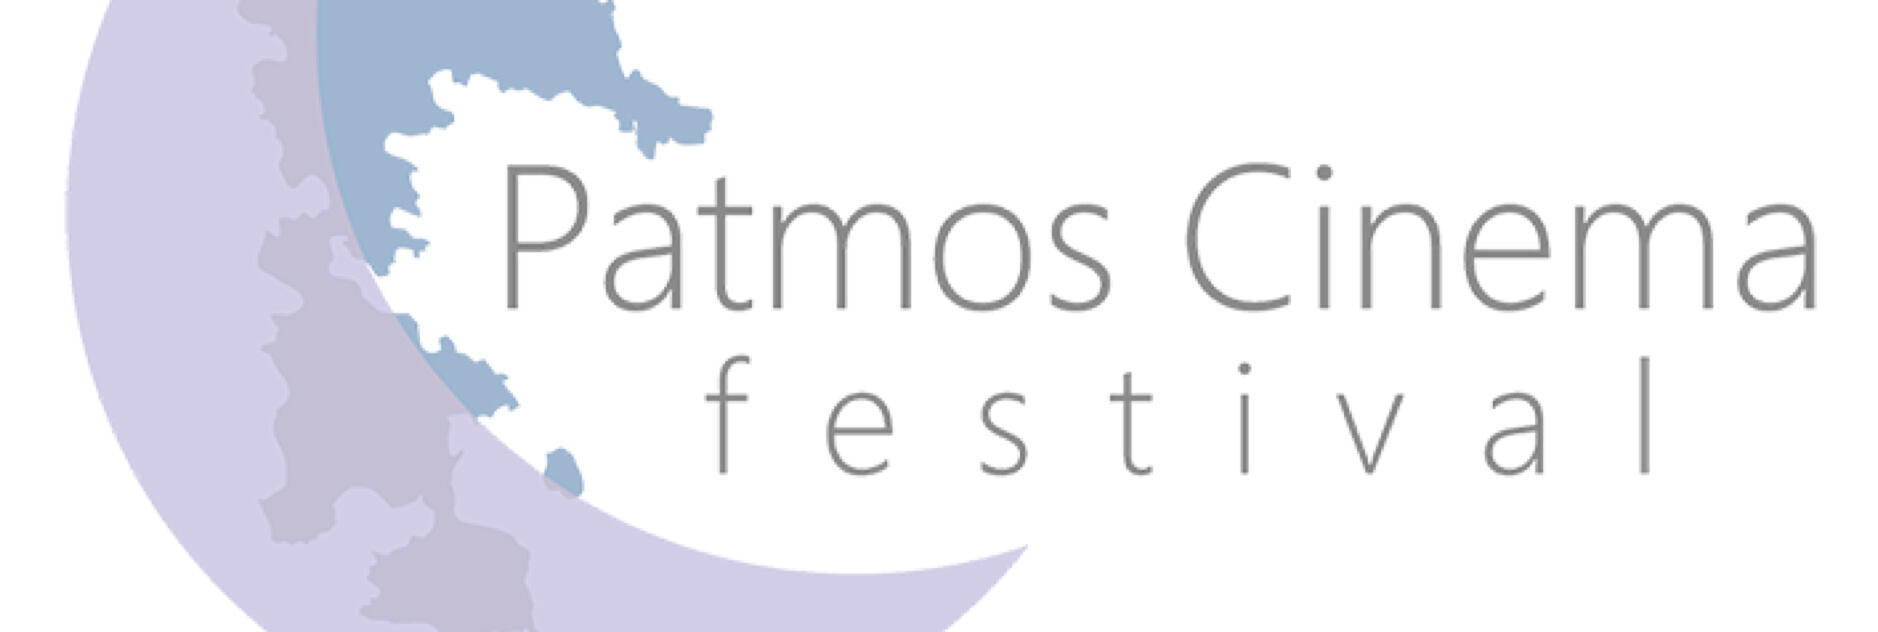 Patmos Cinema Festiva